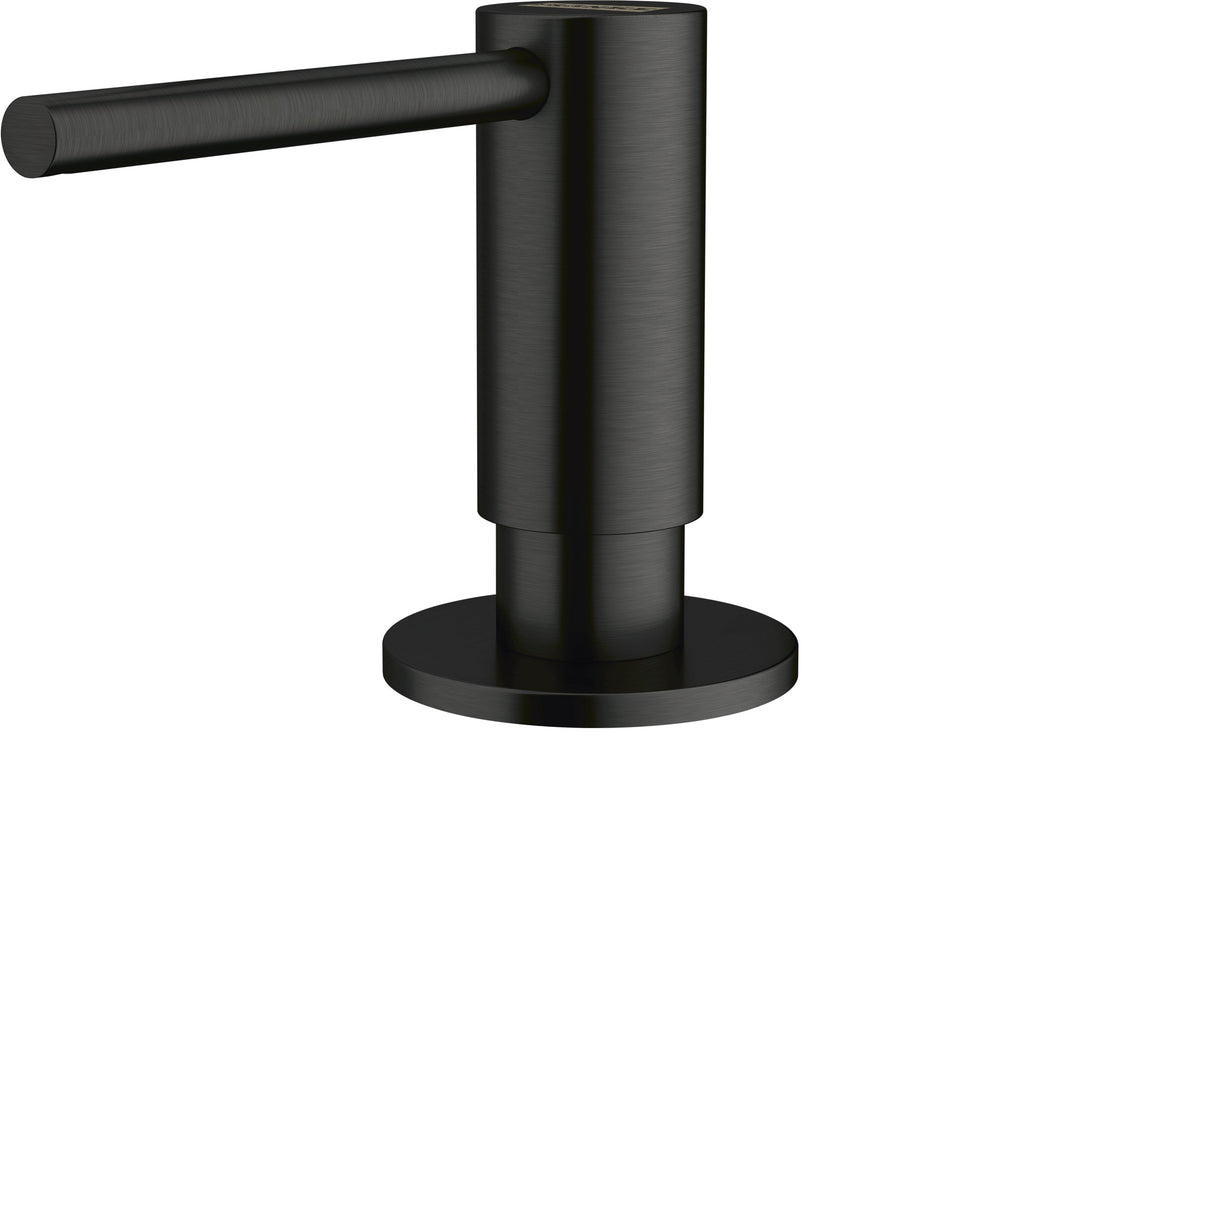 FRANKE ATL-SD-IBK ATL-SD-IBK Atlas Series Single Hole Top Refill Soap Dispenser In Industrial Black